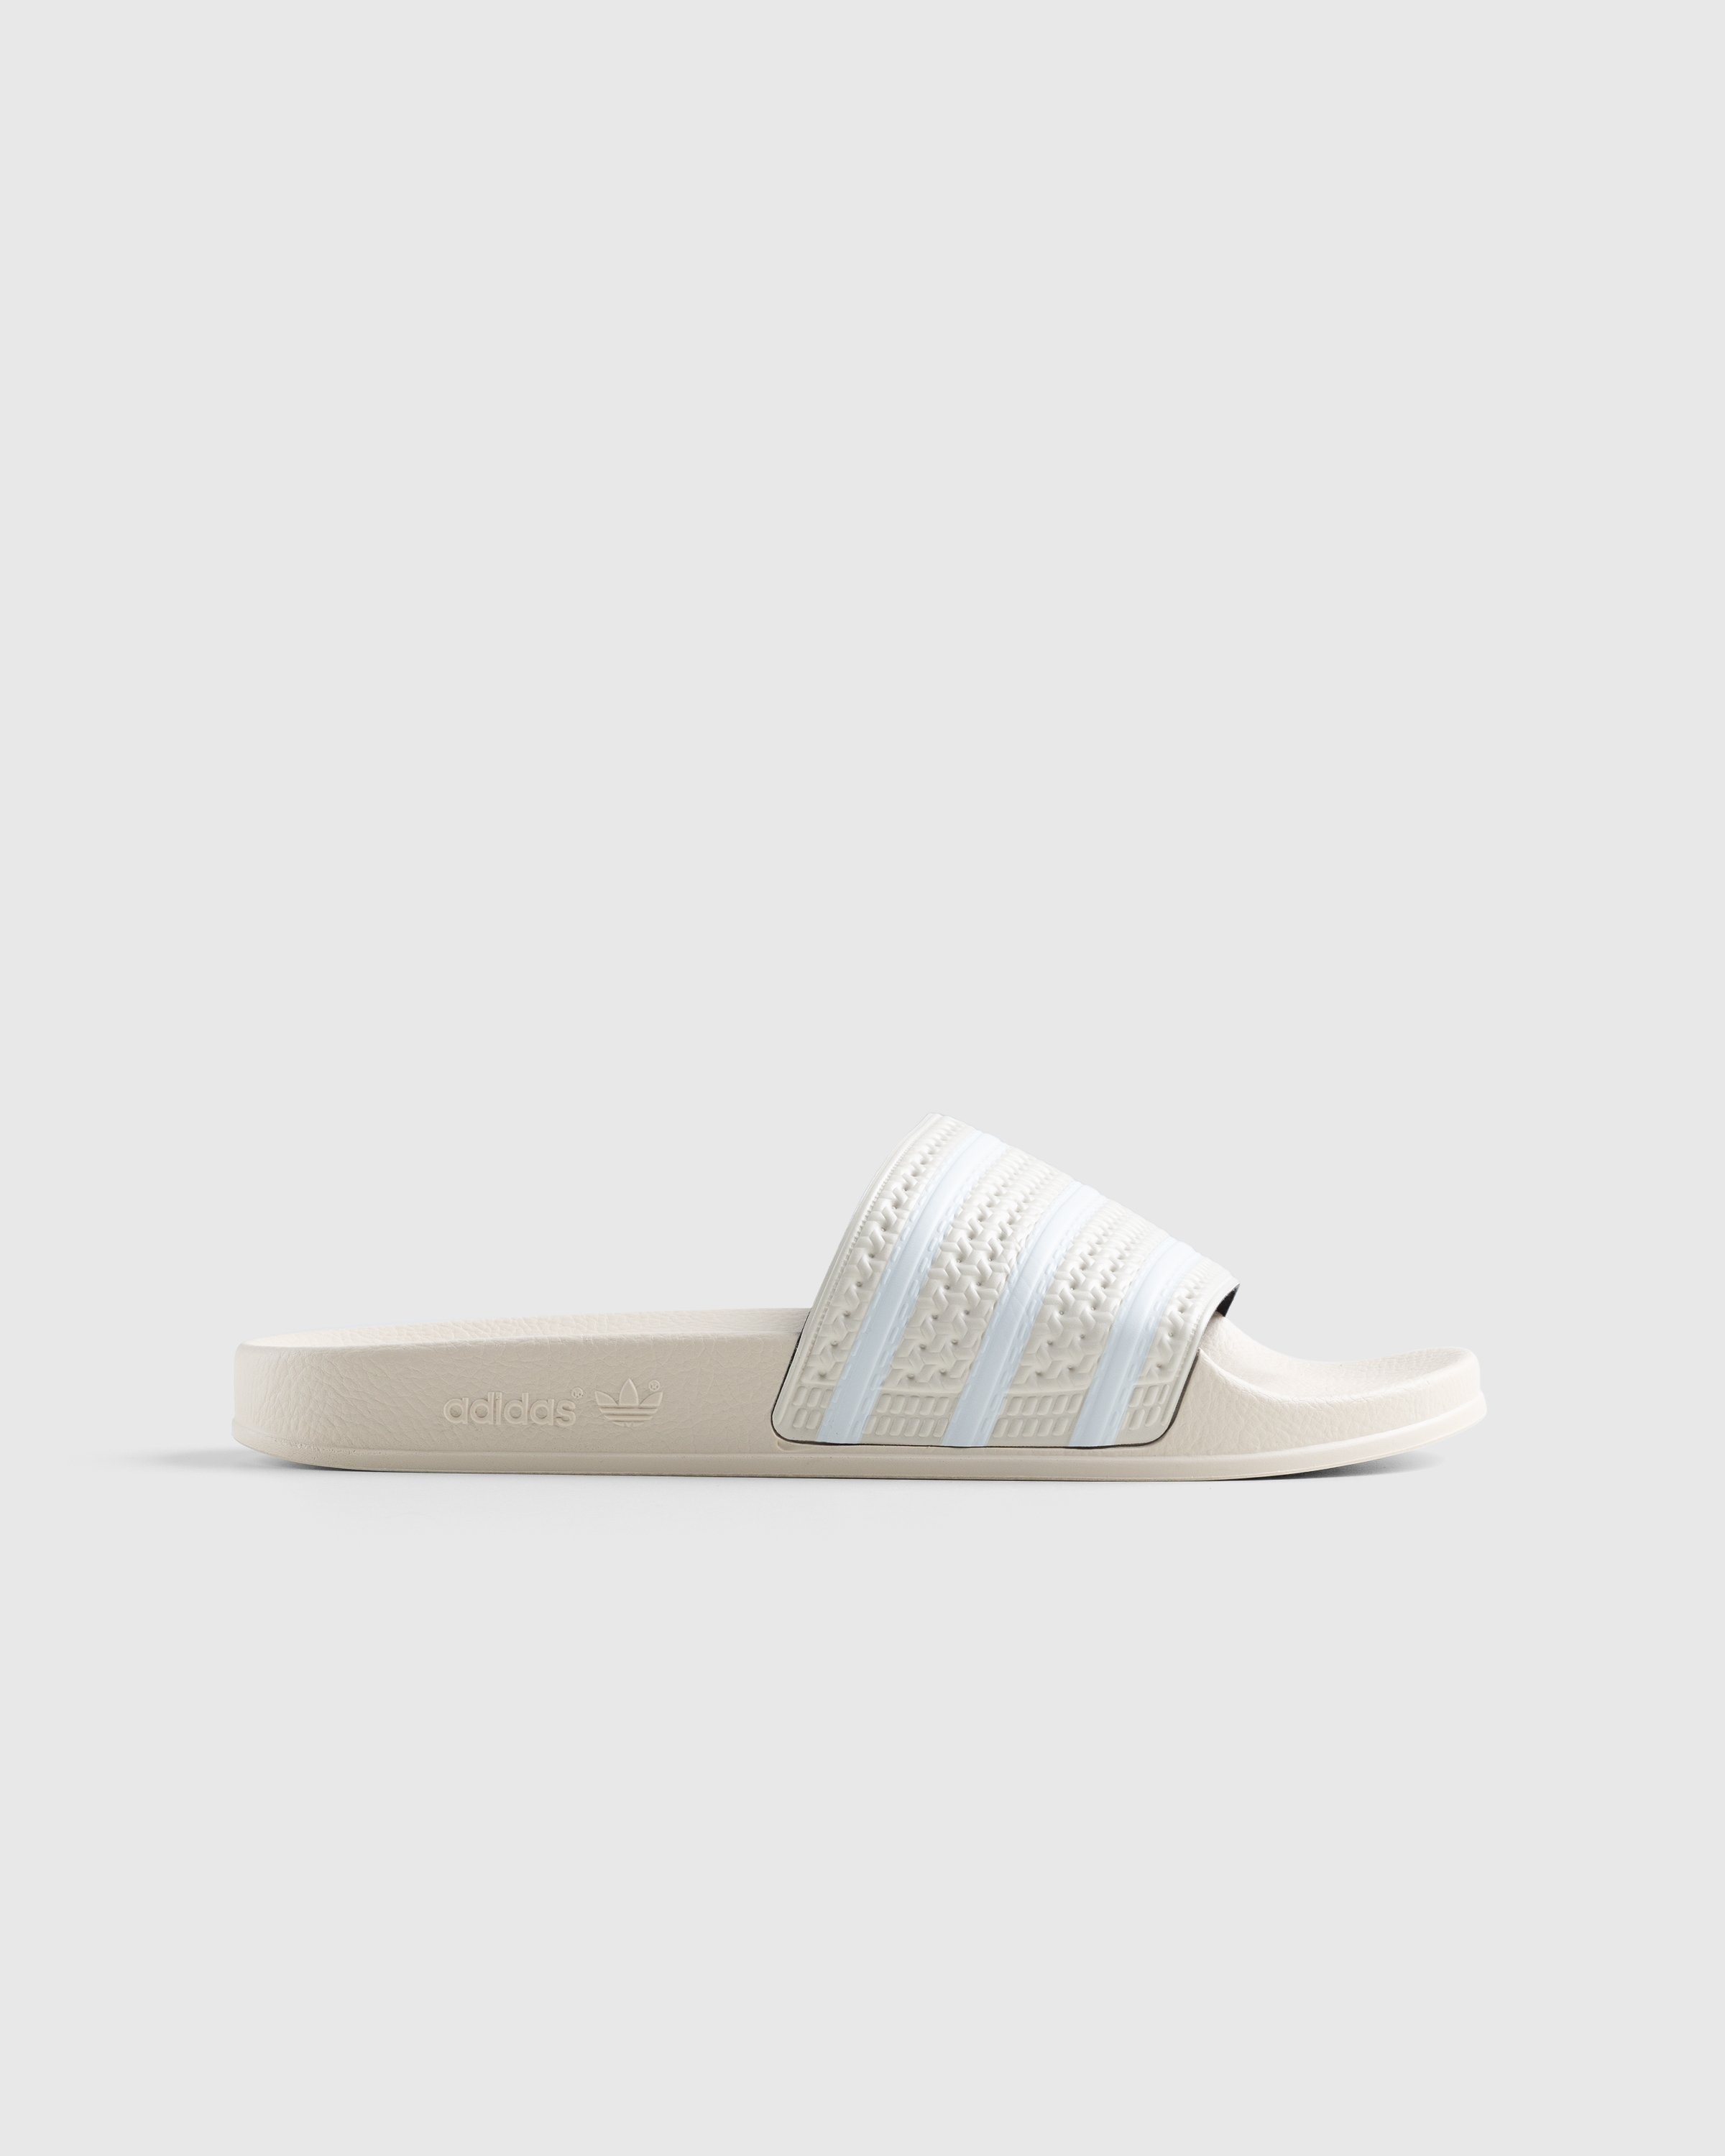 Adidas – Adilette Magic Beige/Cloud White/Off White - Slides - Beige - Image 1